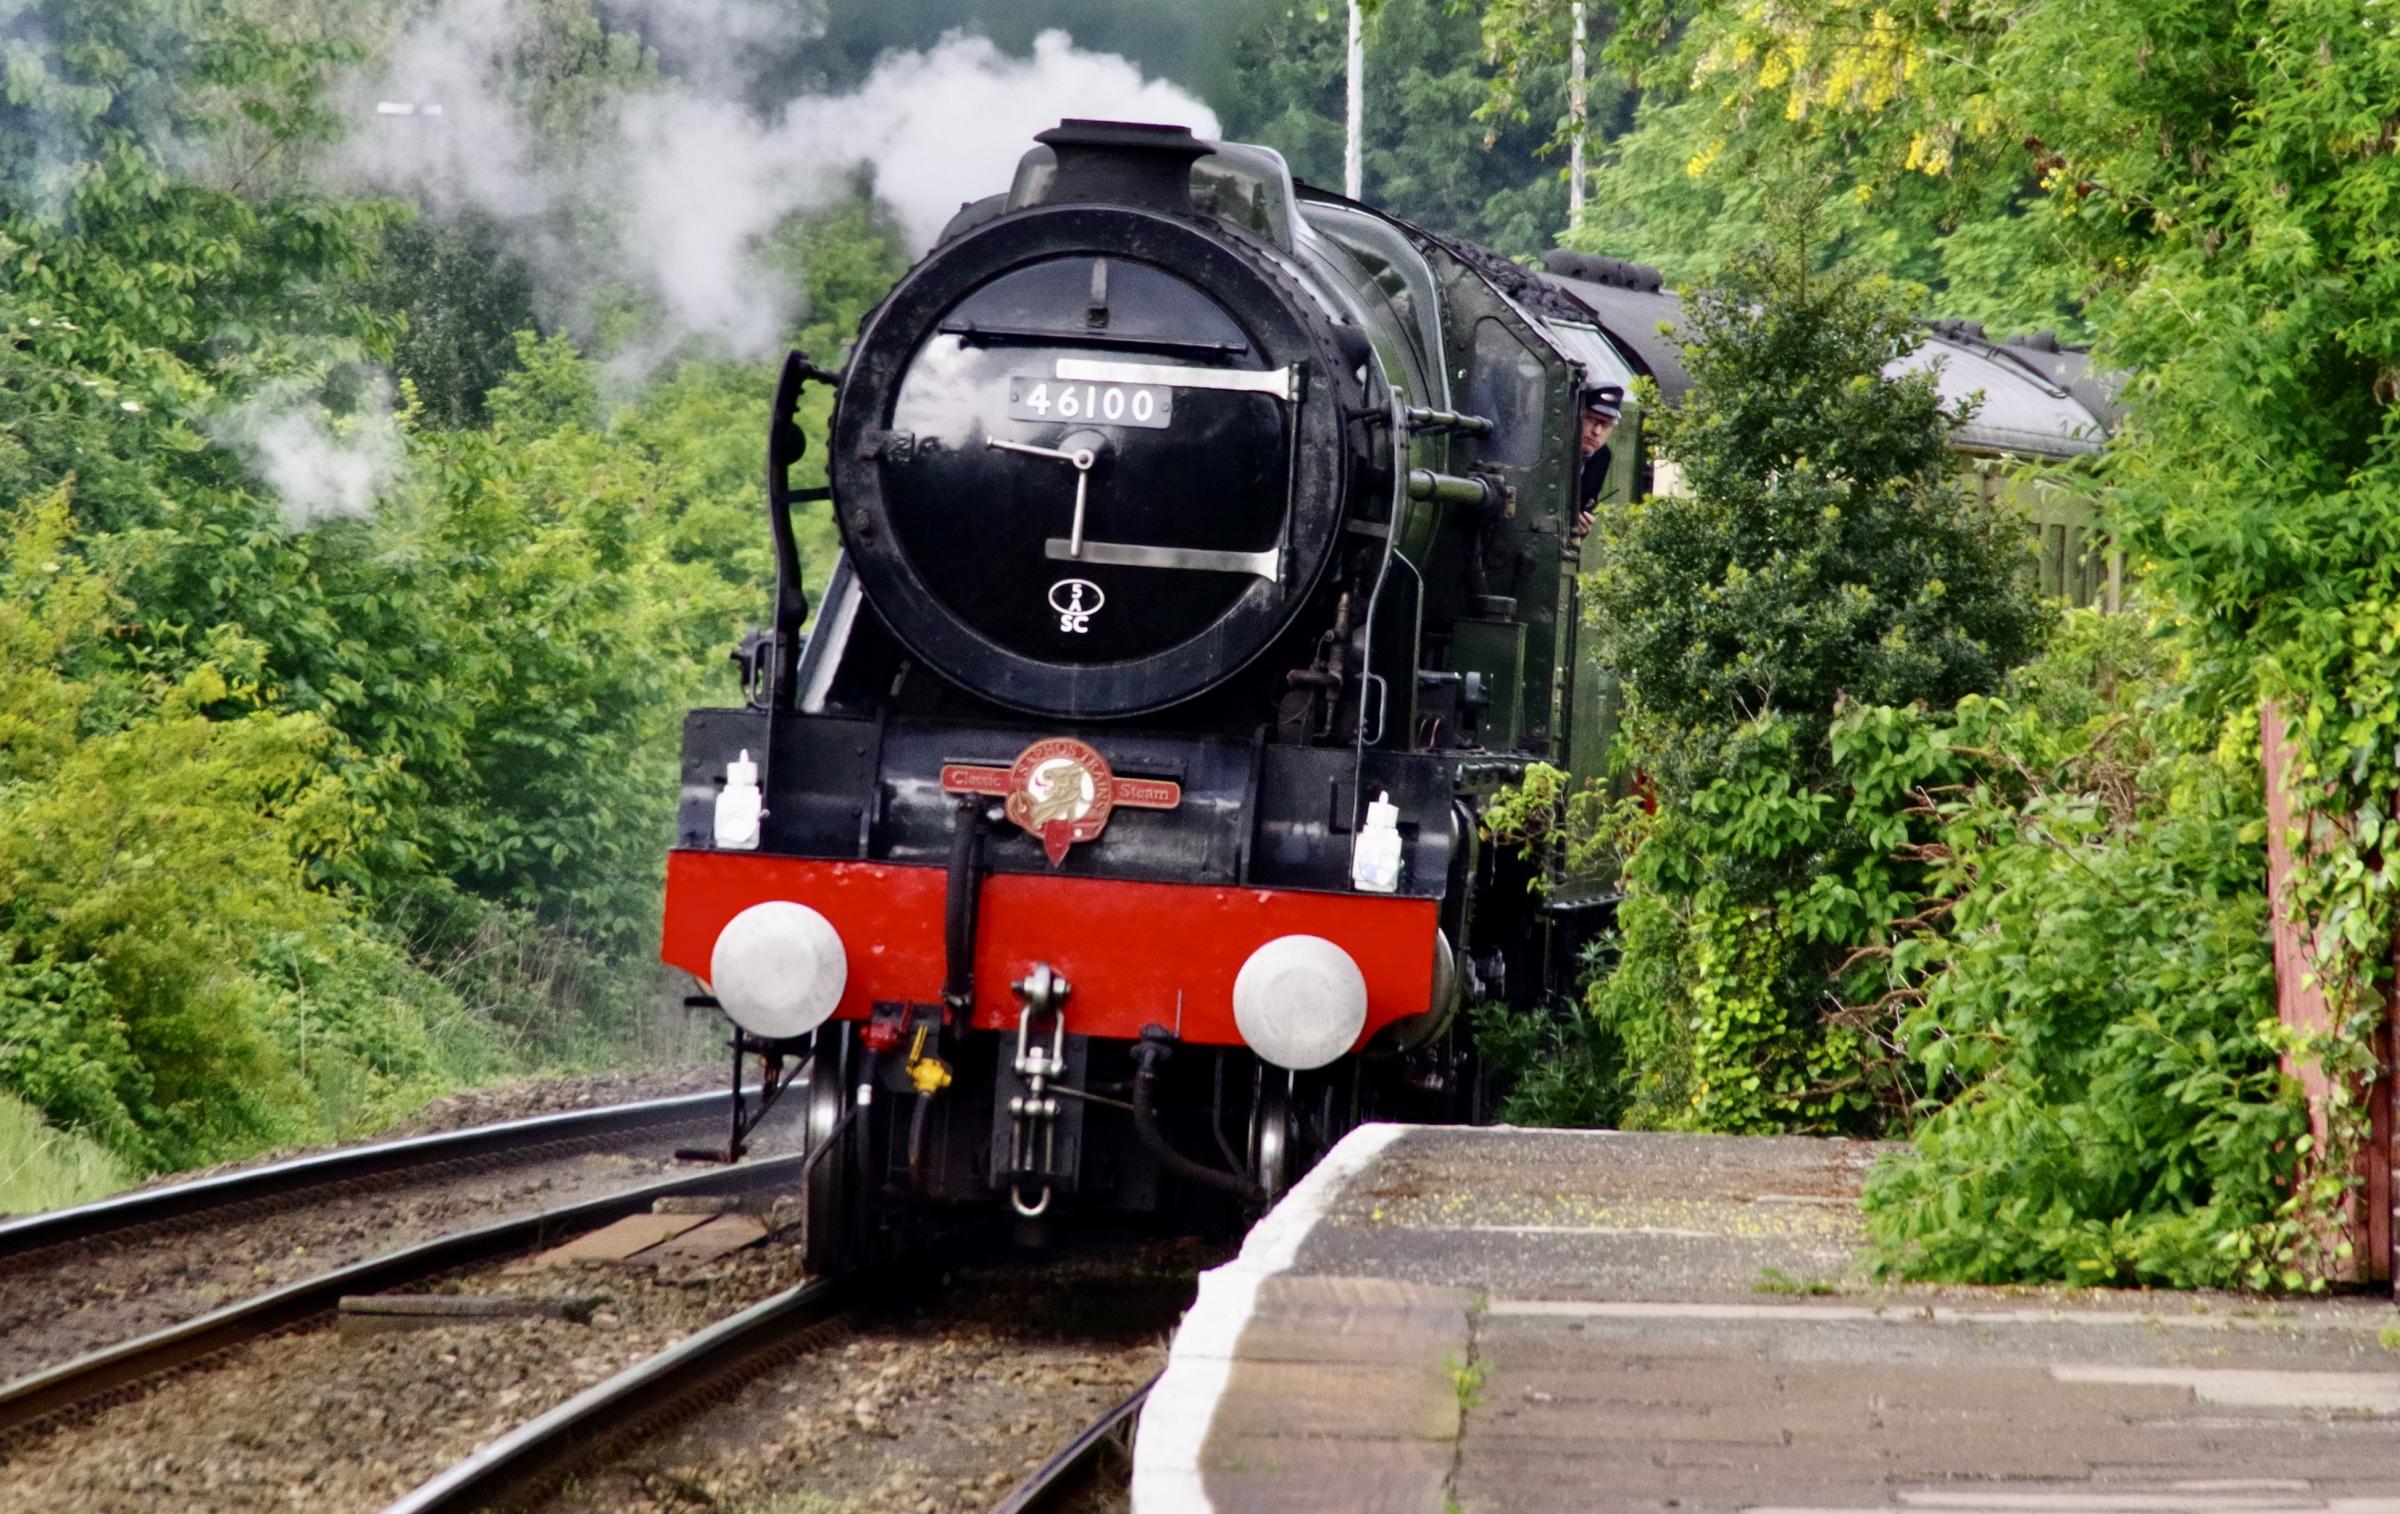 Royal Scotsman train (Lakeland Express) entering Frodsham Station